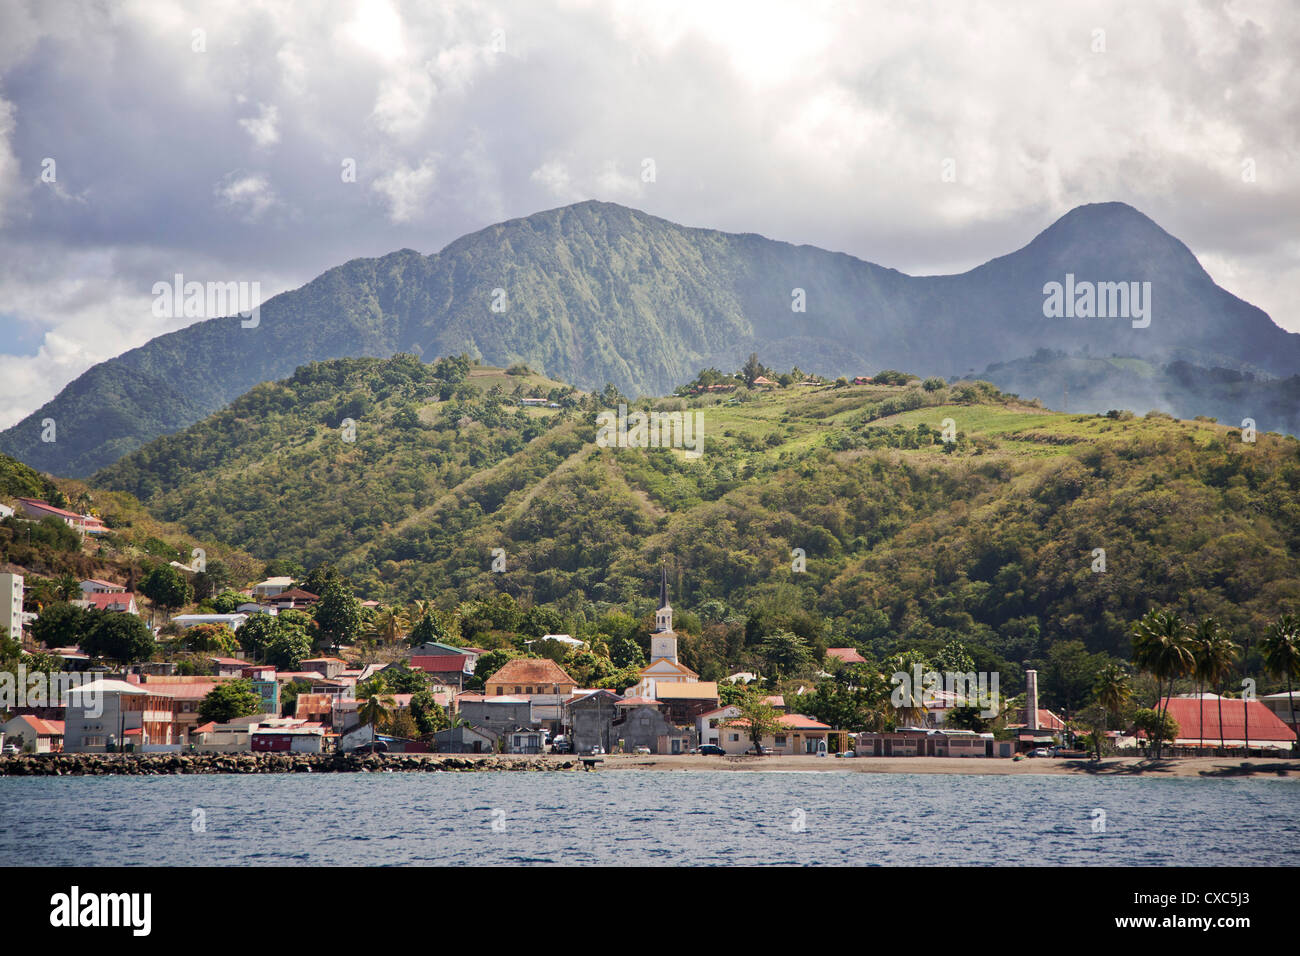 View of Saint-Pierre showing Mount Pelee in background, Fort-de-France, Martinique, Lesser Antilles, West Indies Stock Photo